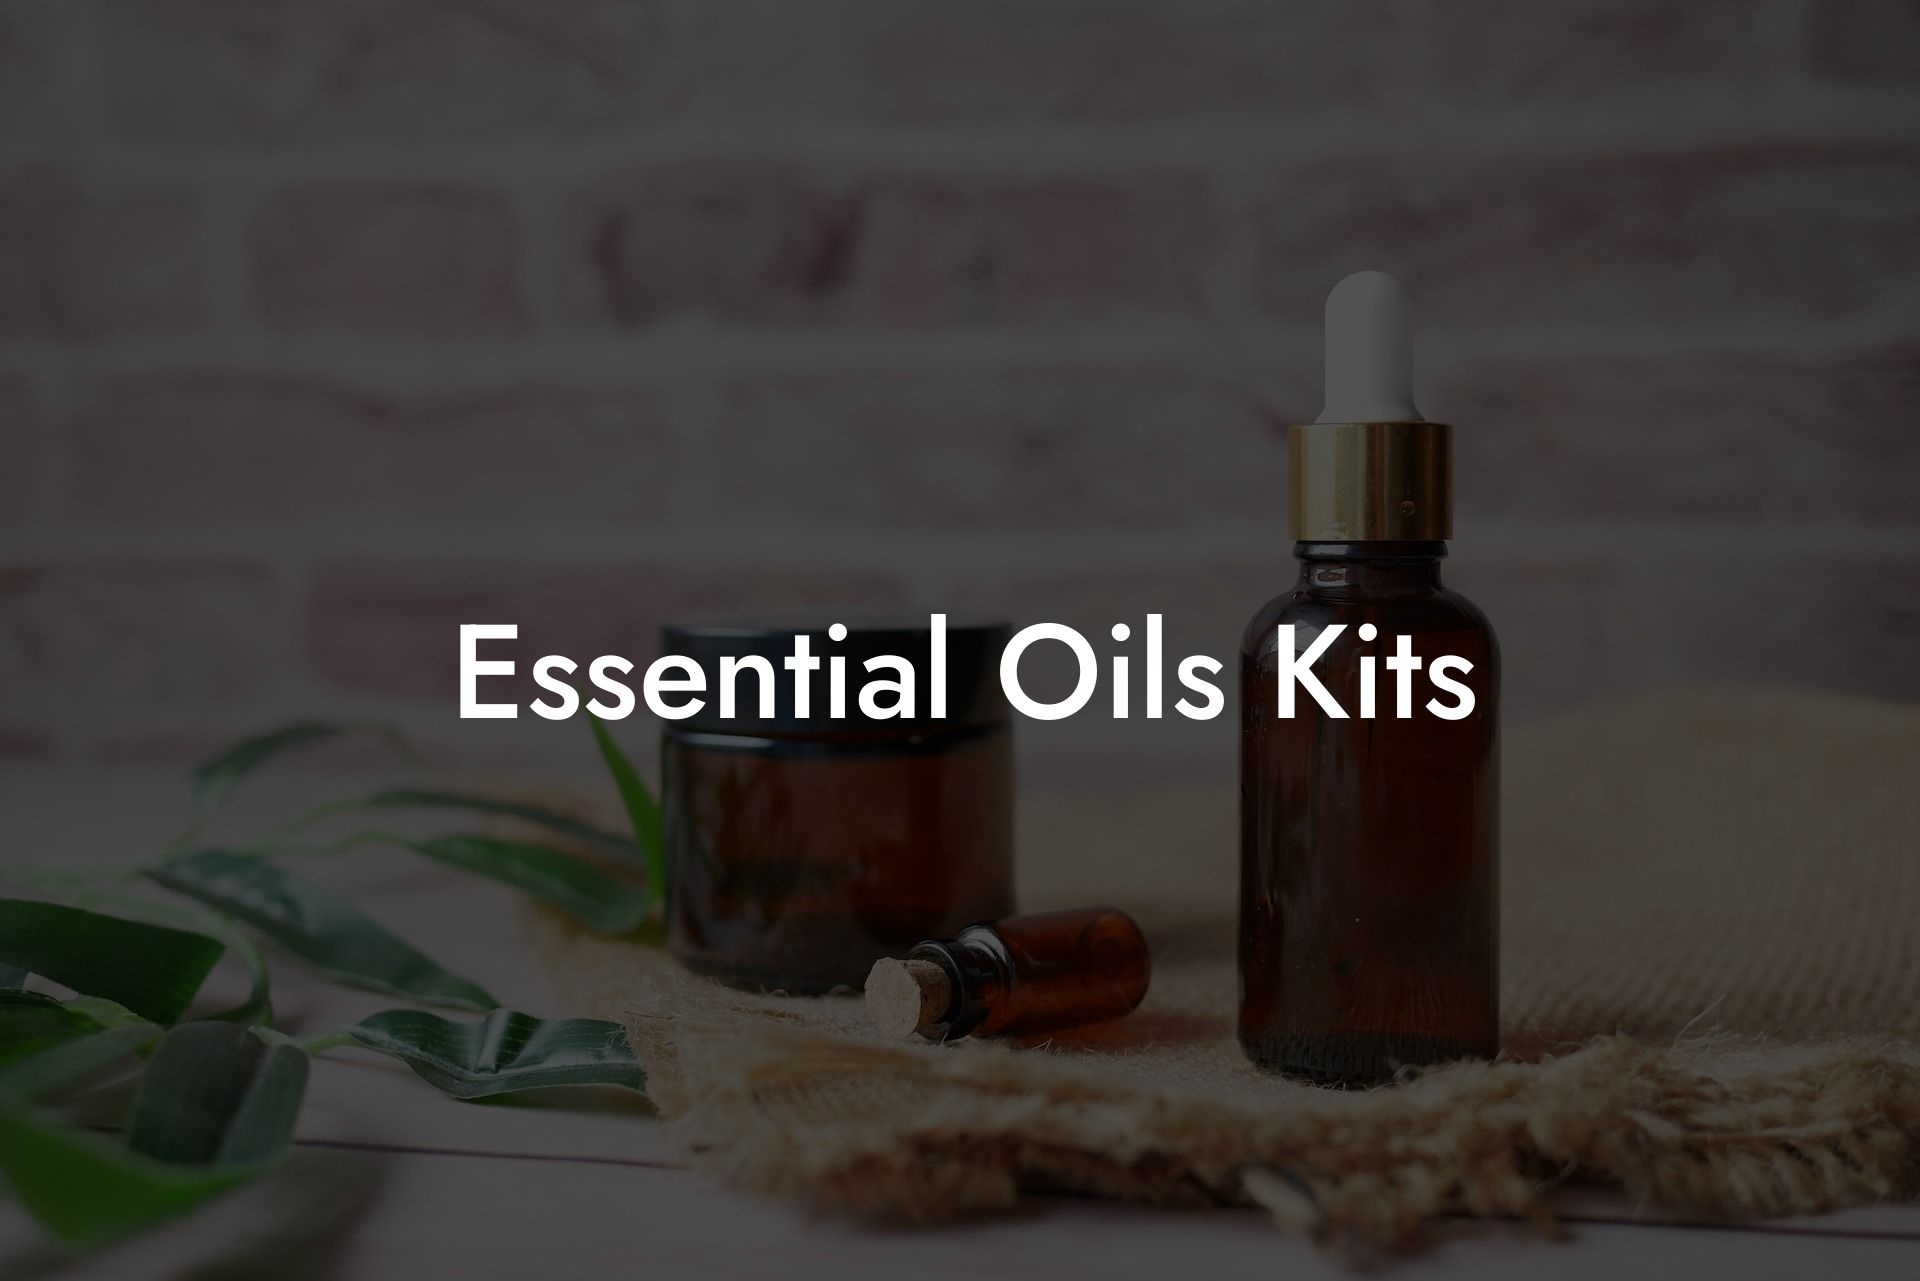 Essential Oils Kits